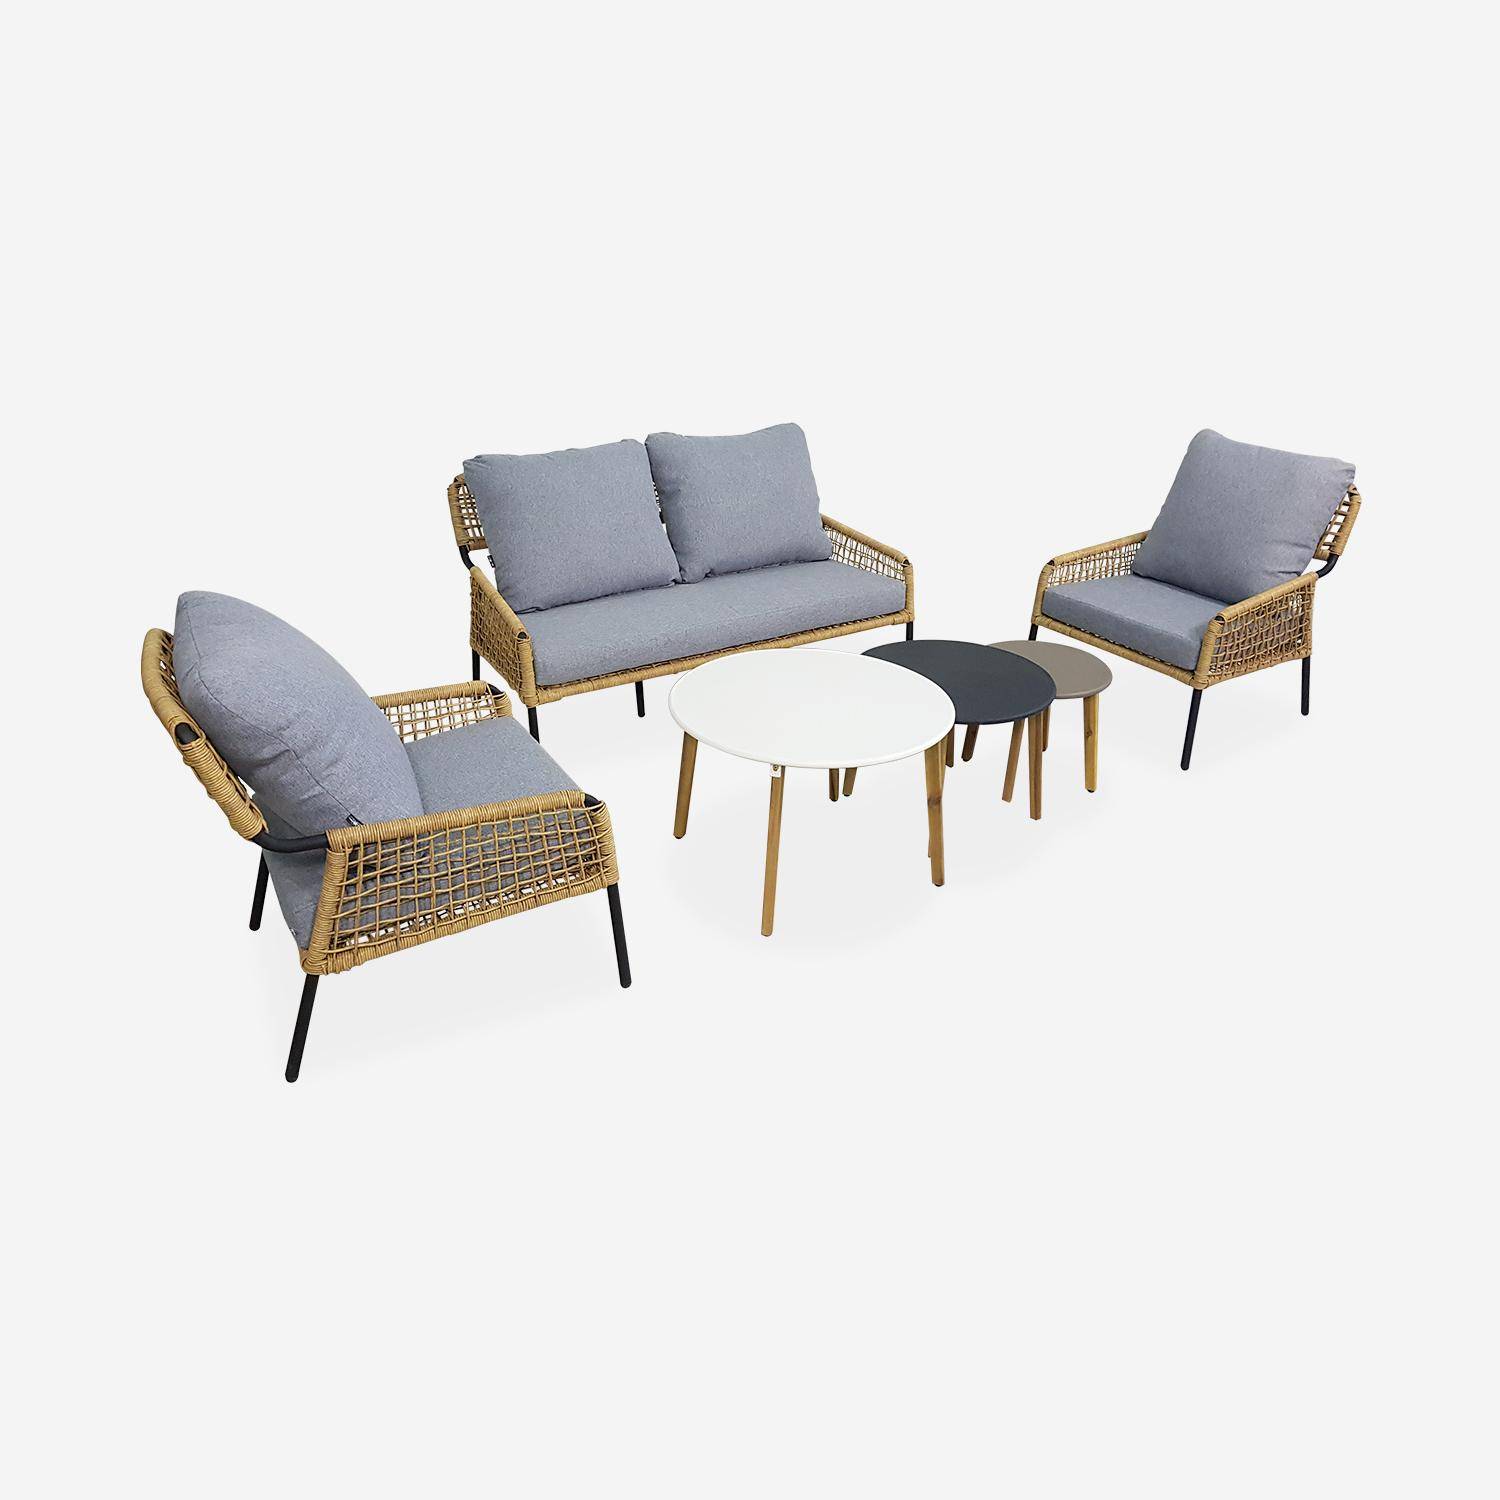 4-seater bamboo-effect rattan garden sofa set - Komodo - Natural, Grey,sweeek,Photo1